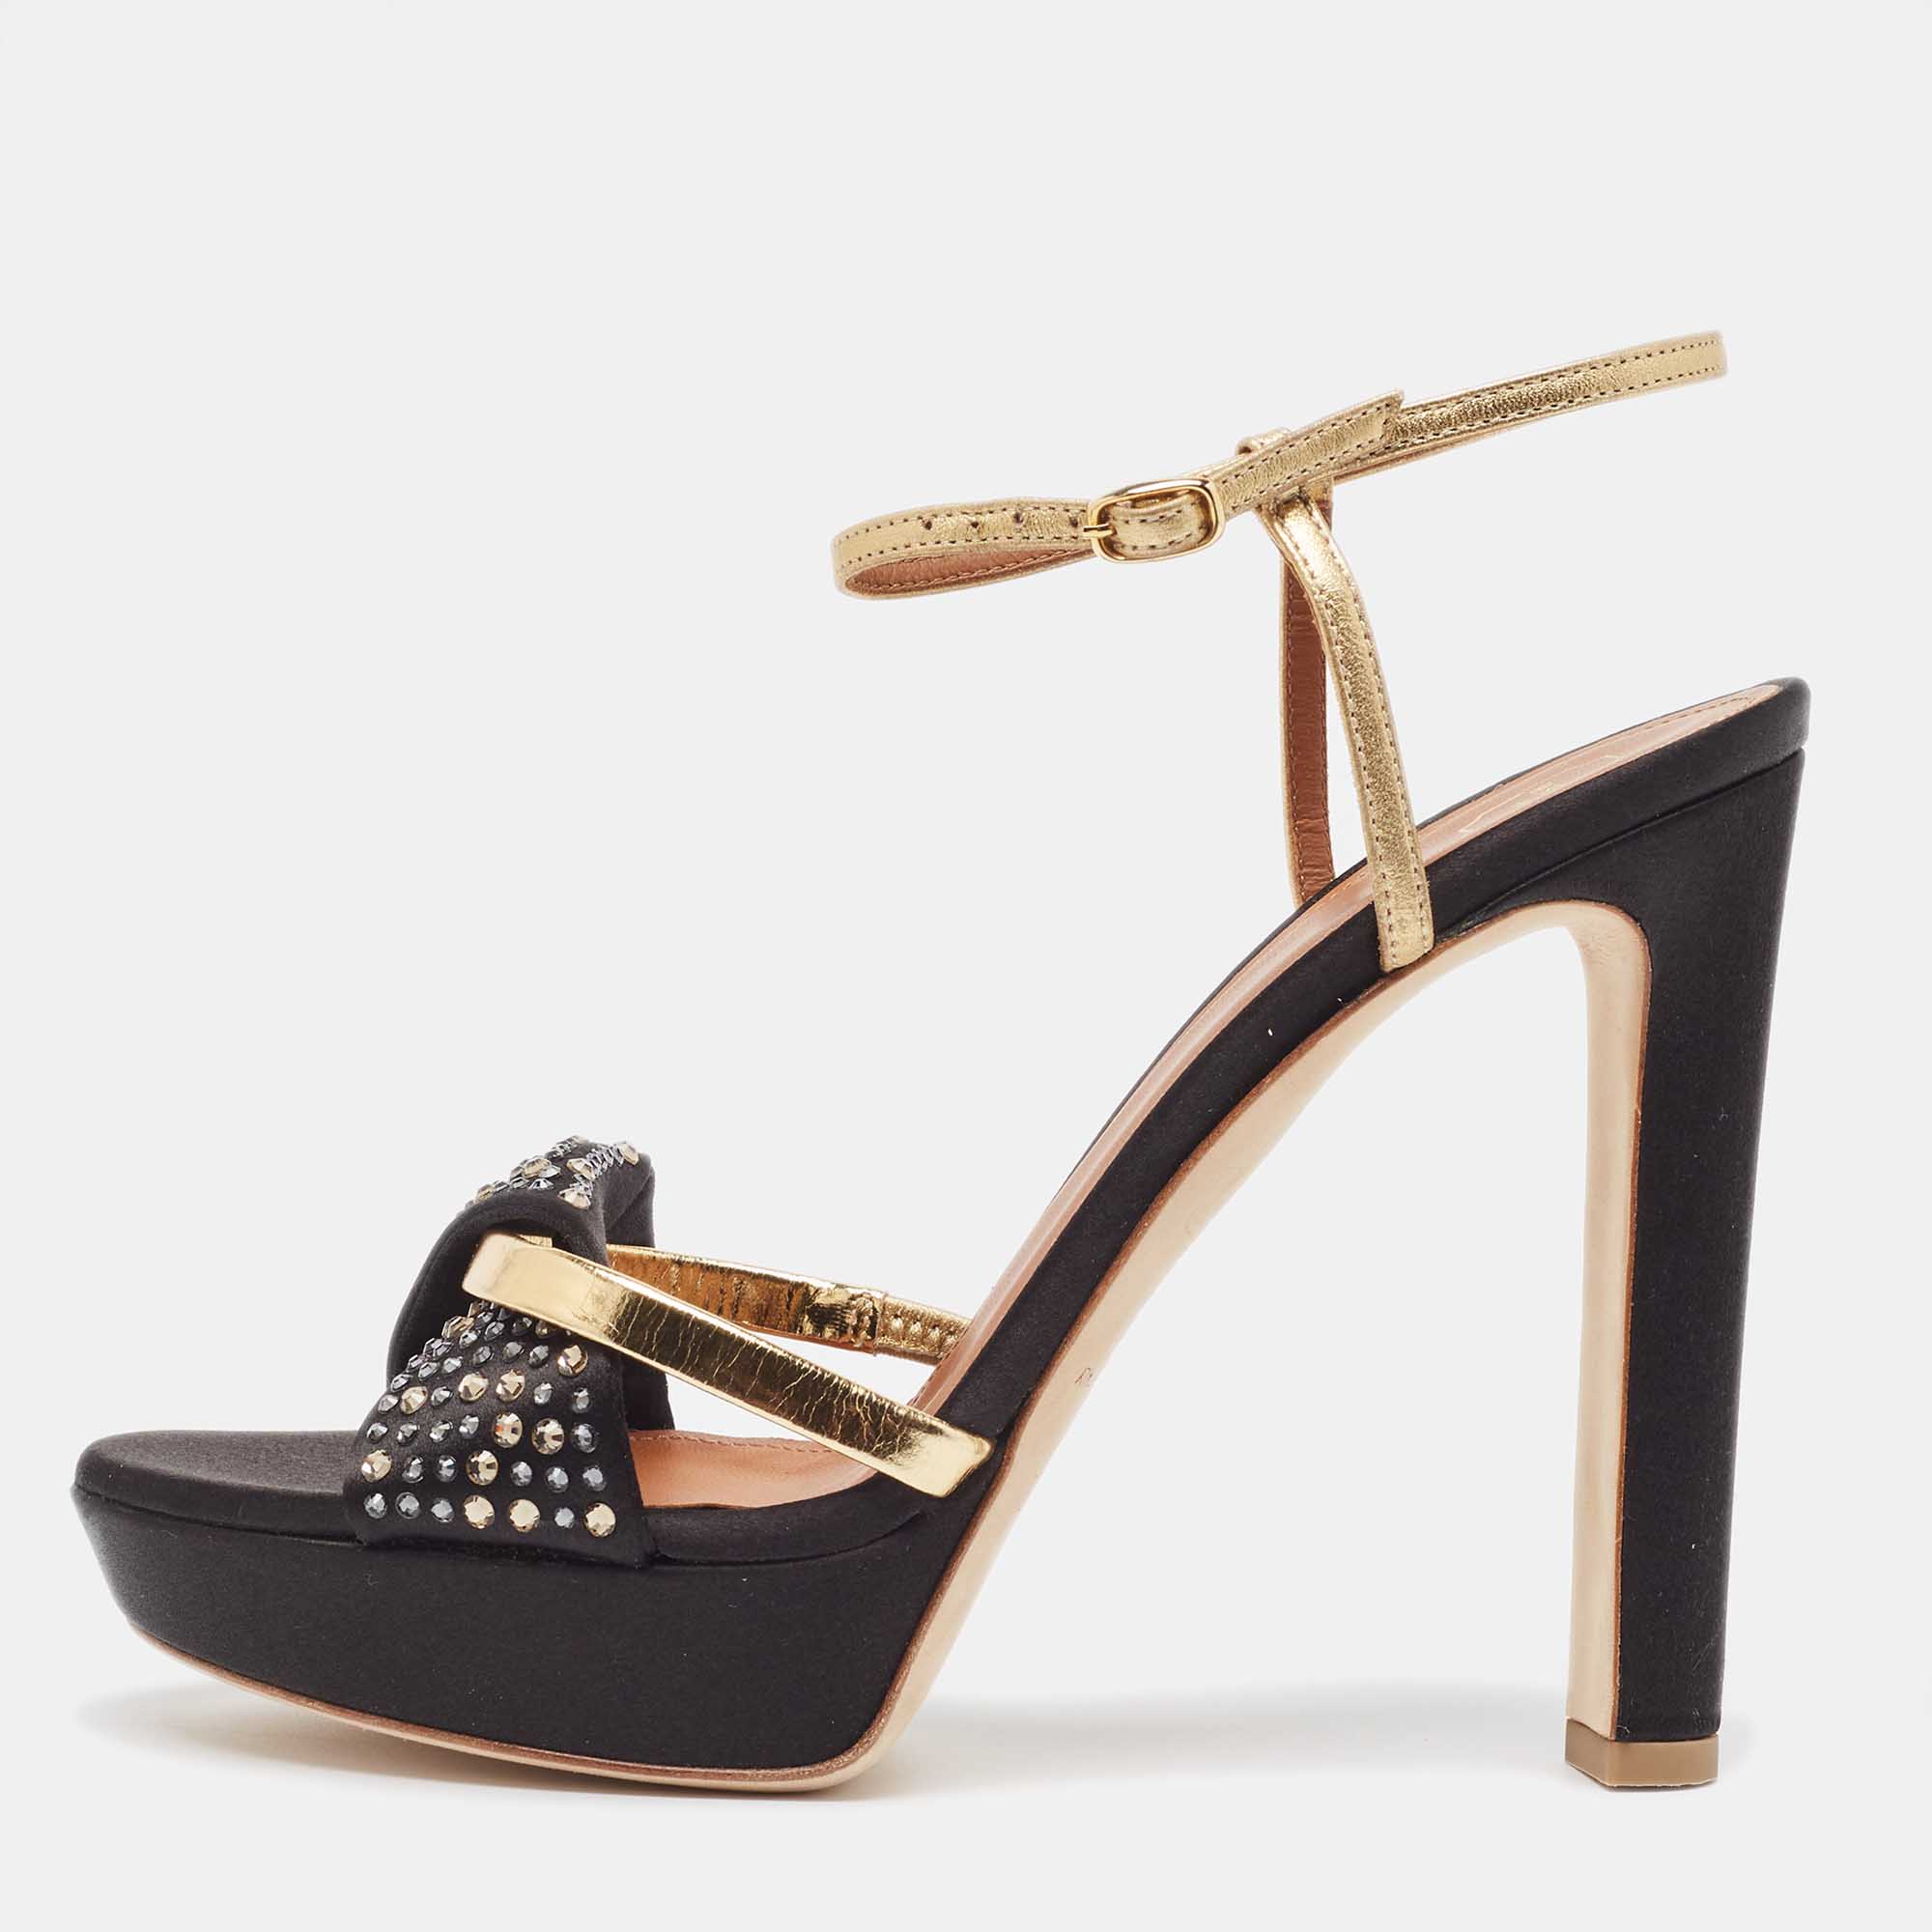 Malone souliers black/gold satin and leather lauren platform sandals size 39